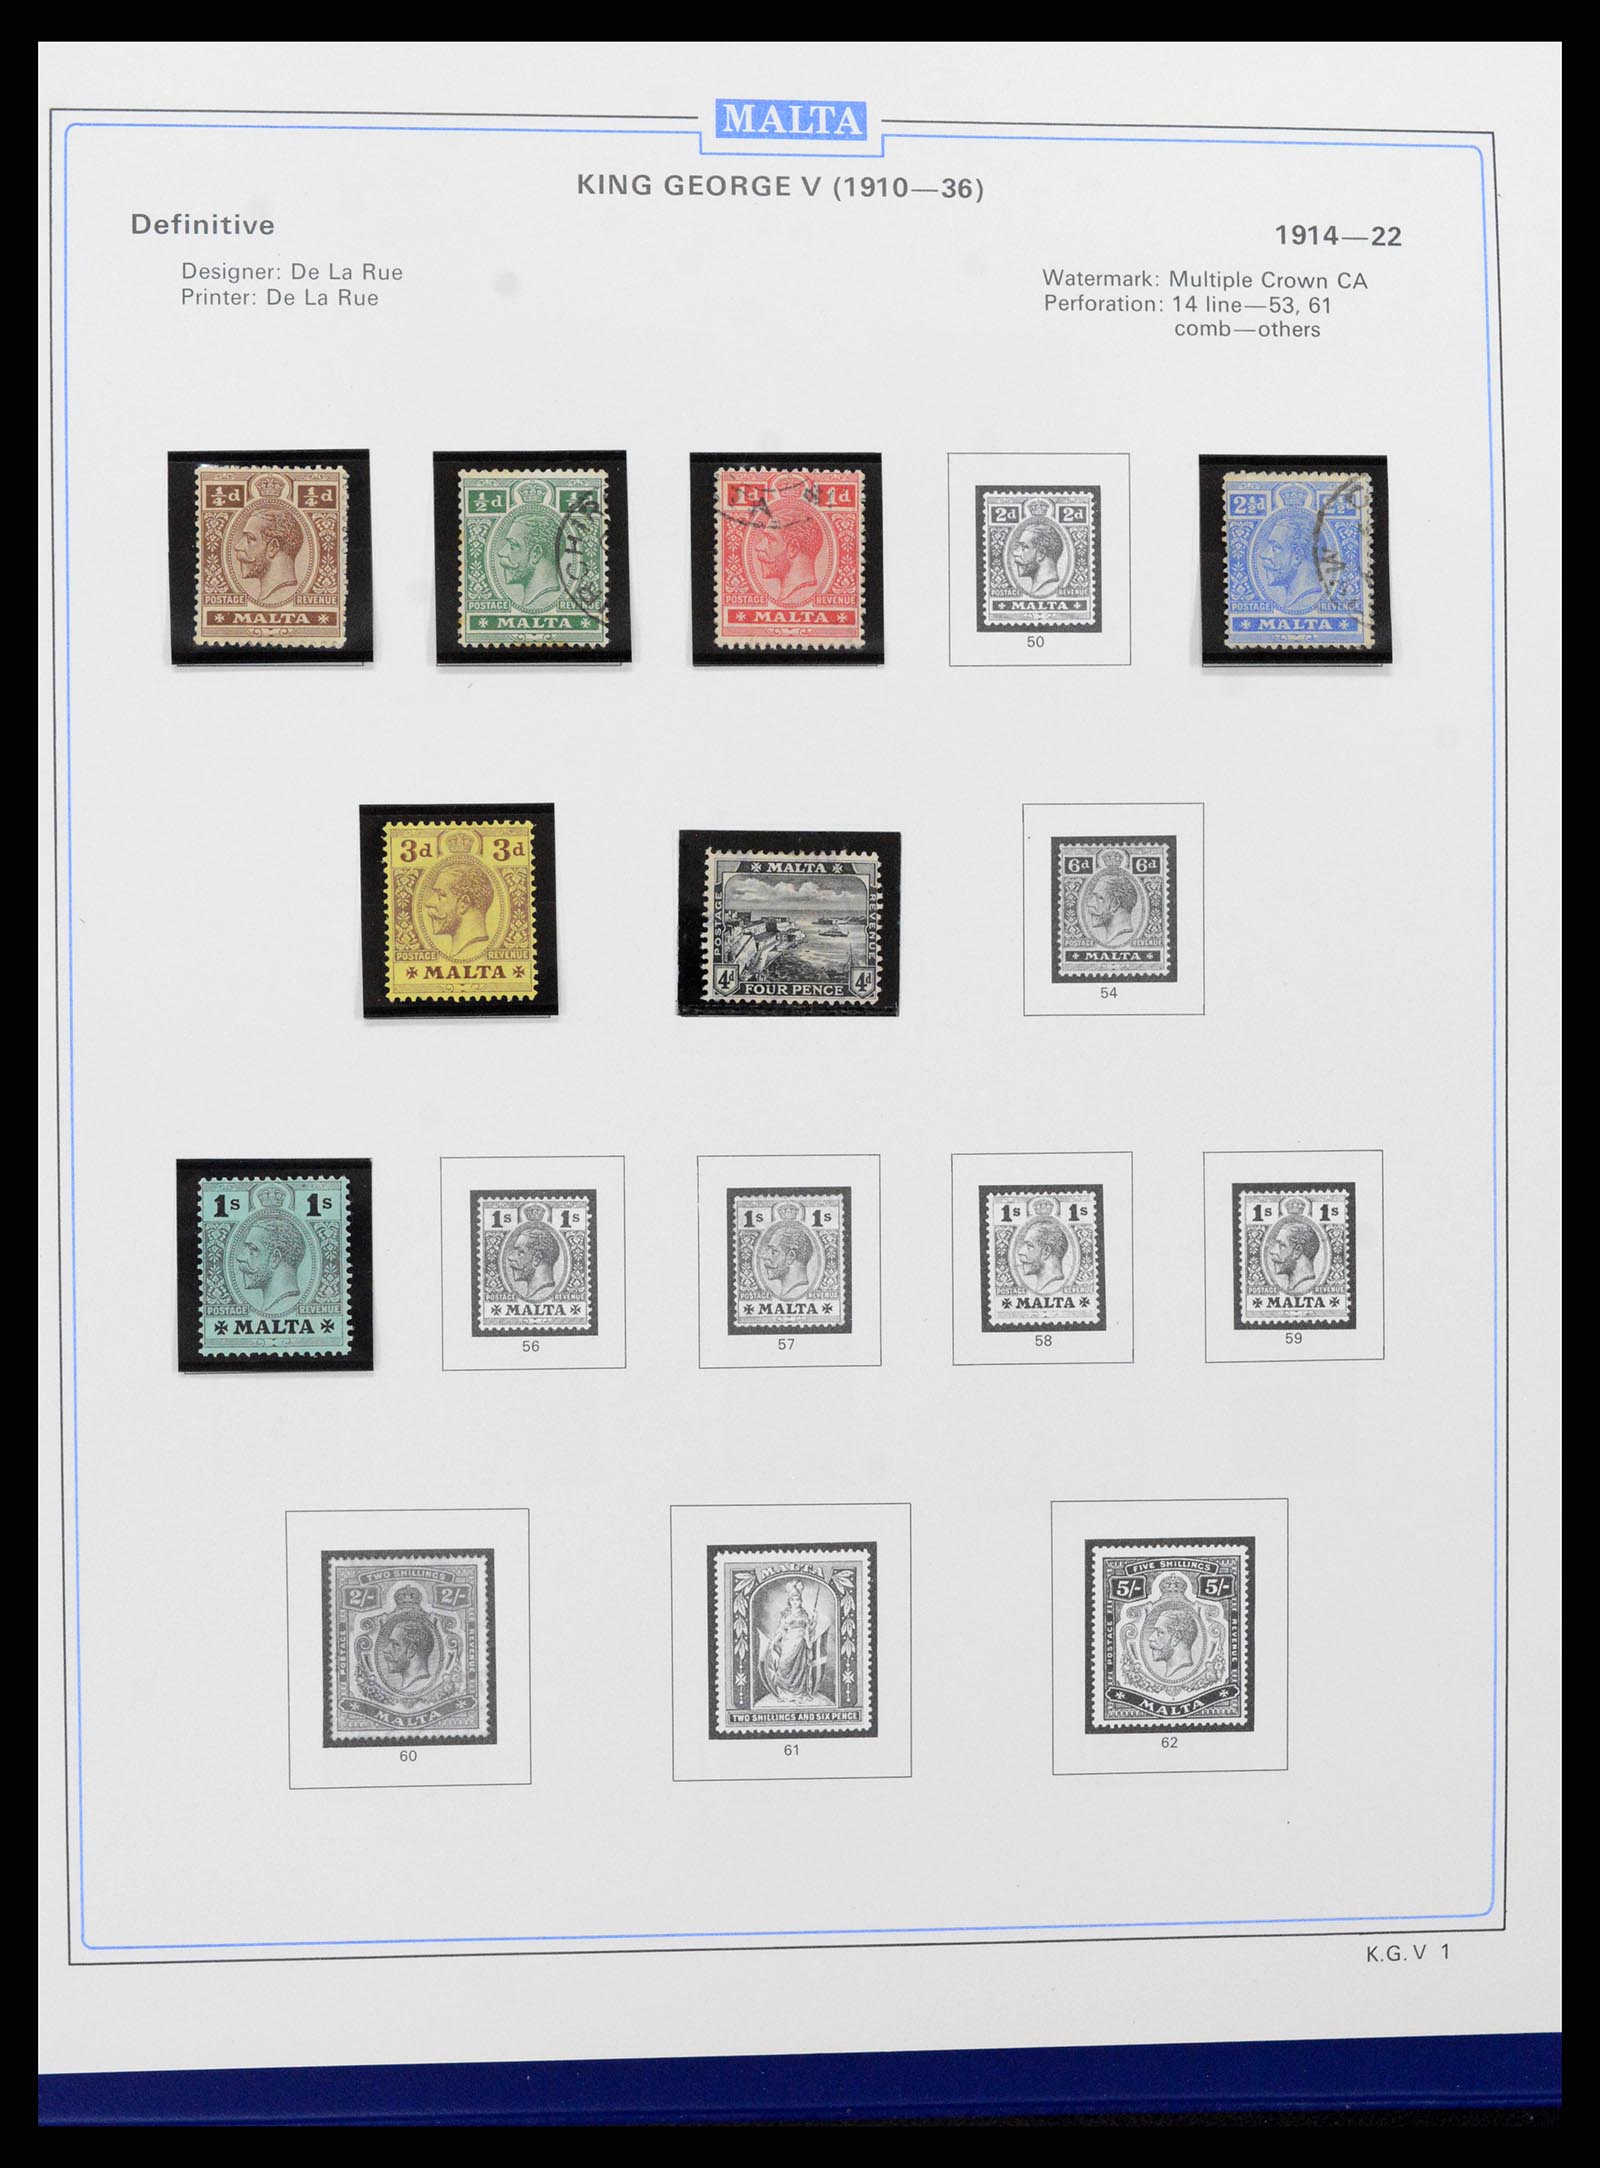 37374 005 - Stamp collection 37374 Malta 1885-2012.